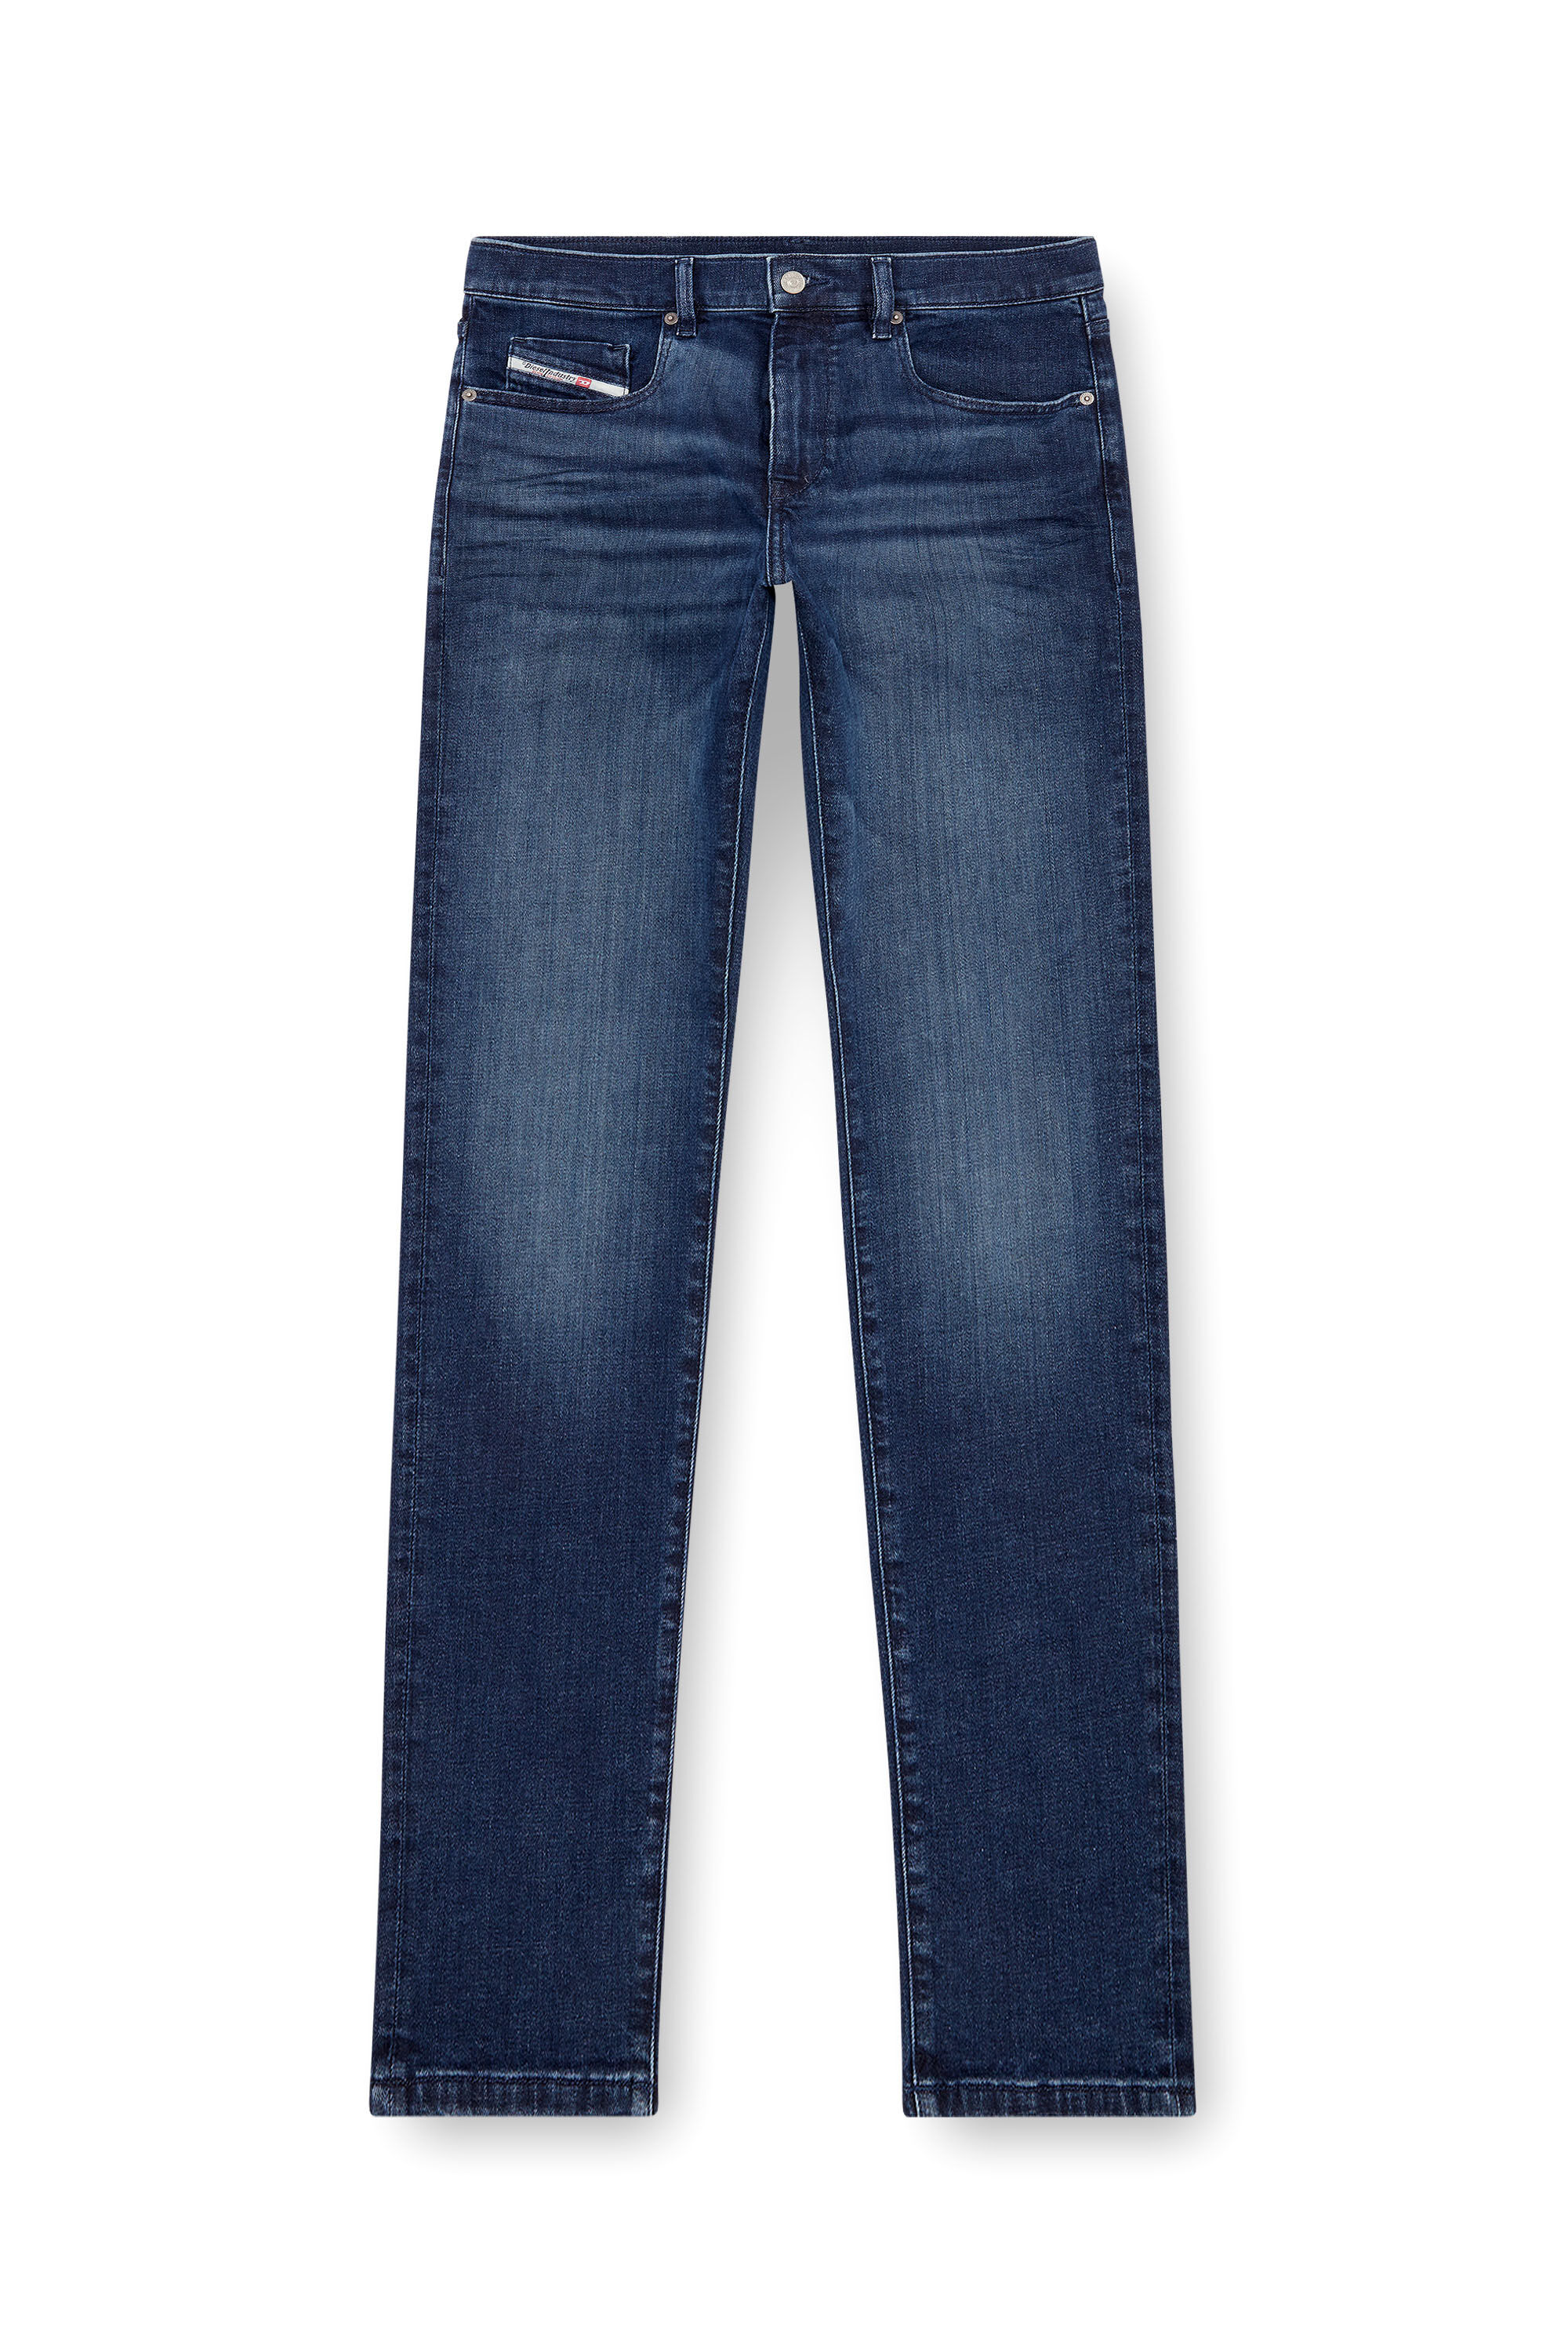 Diesel - Slim Jeans 2019 D-Strukt 0GRDJ, Hombre Slim Jeans - 2019 D-Strukt in Azul marino - Image 2